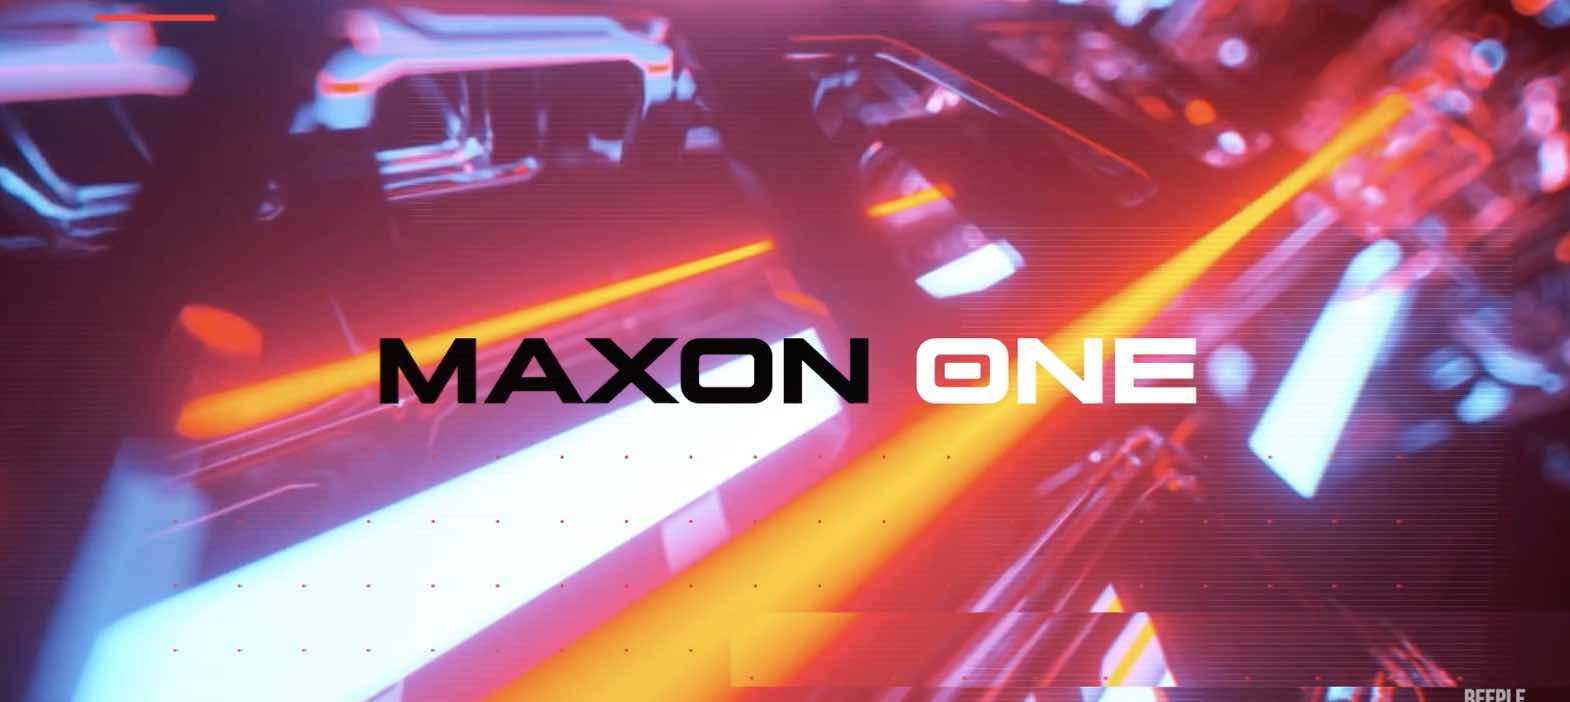 maxon one